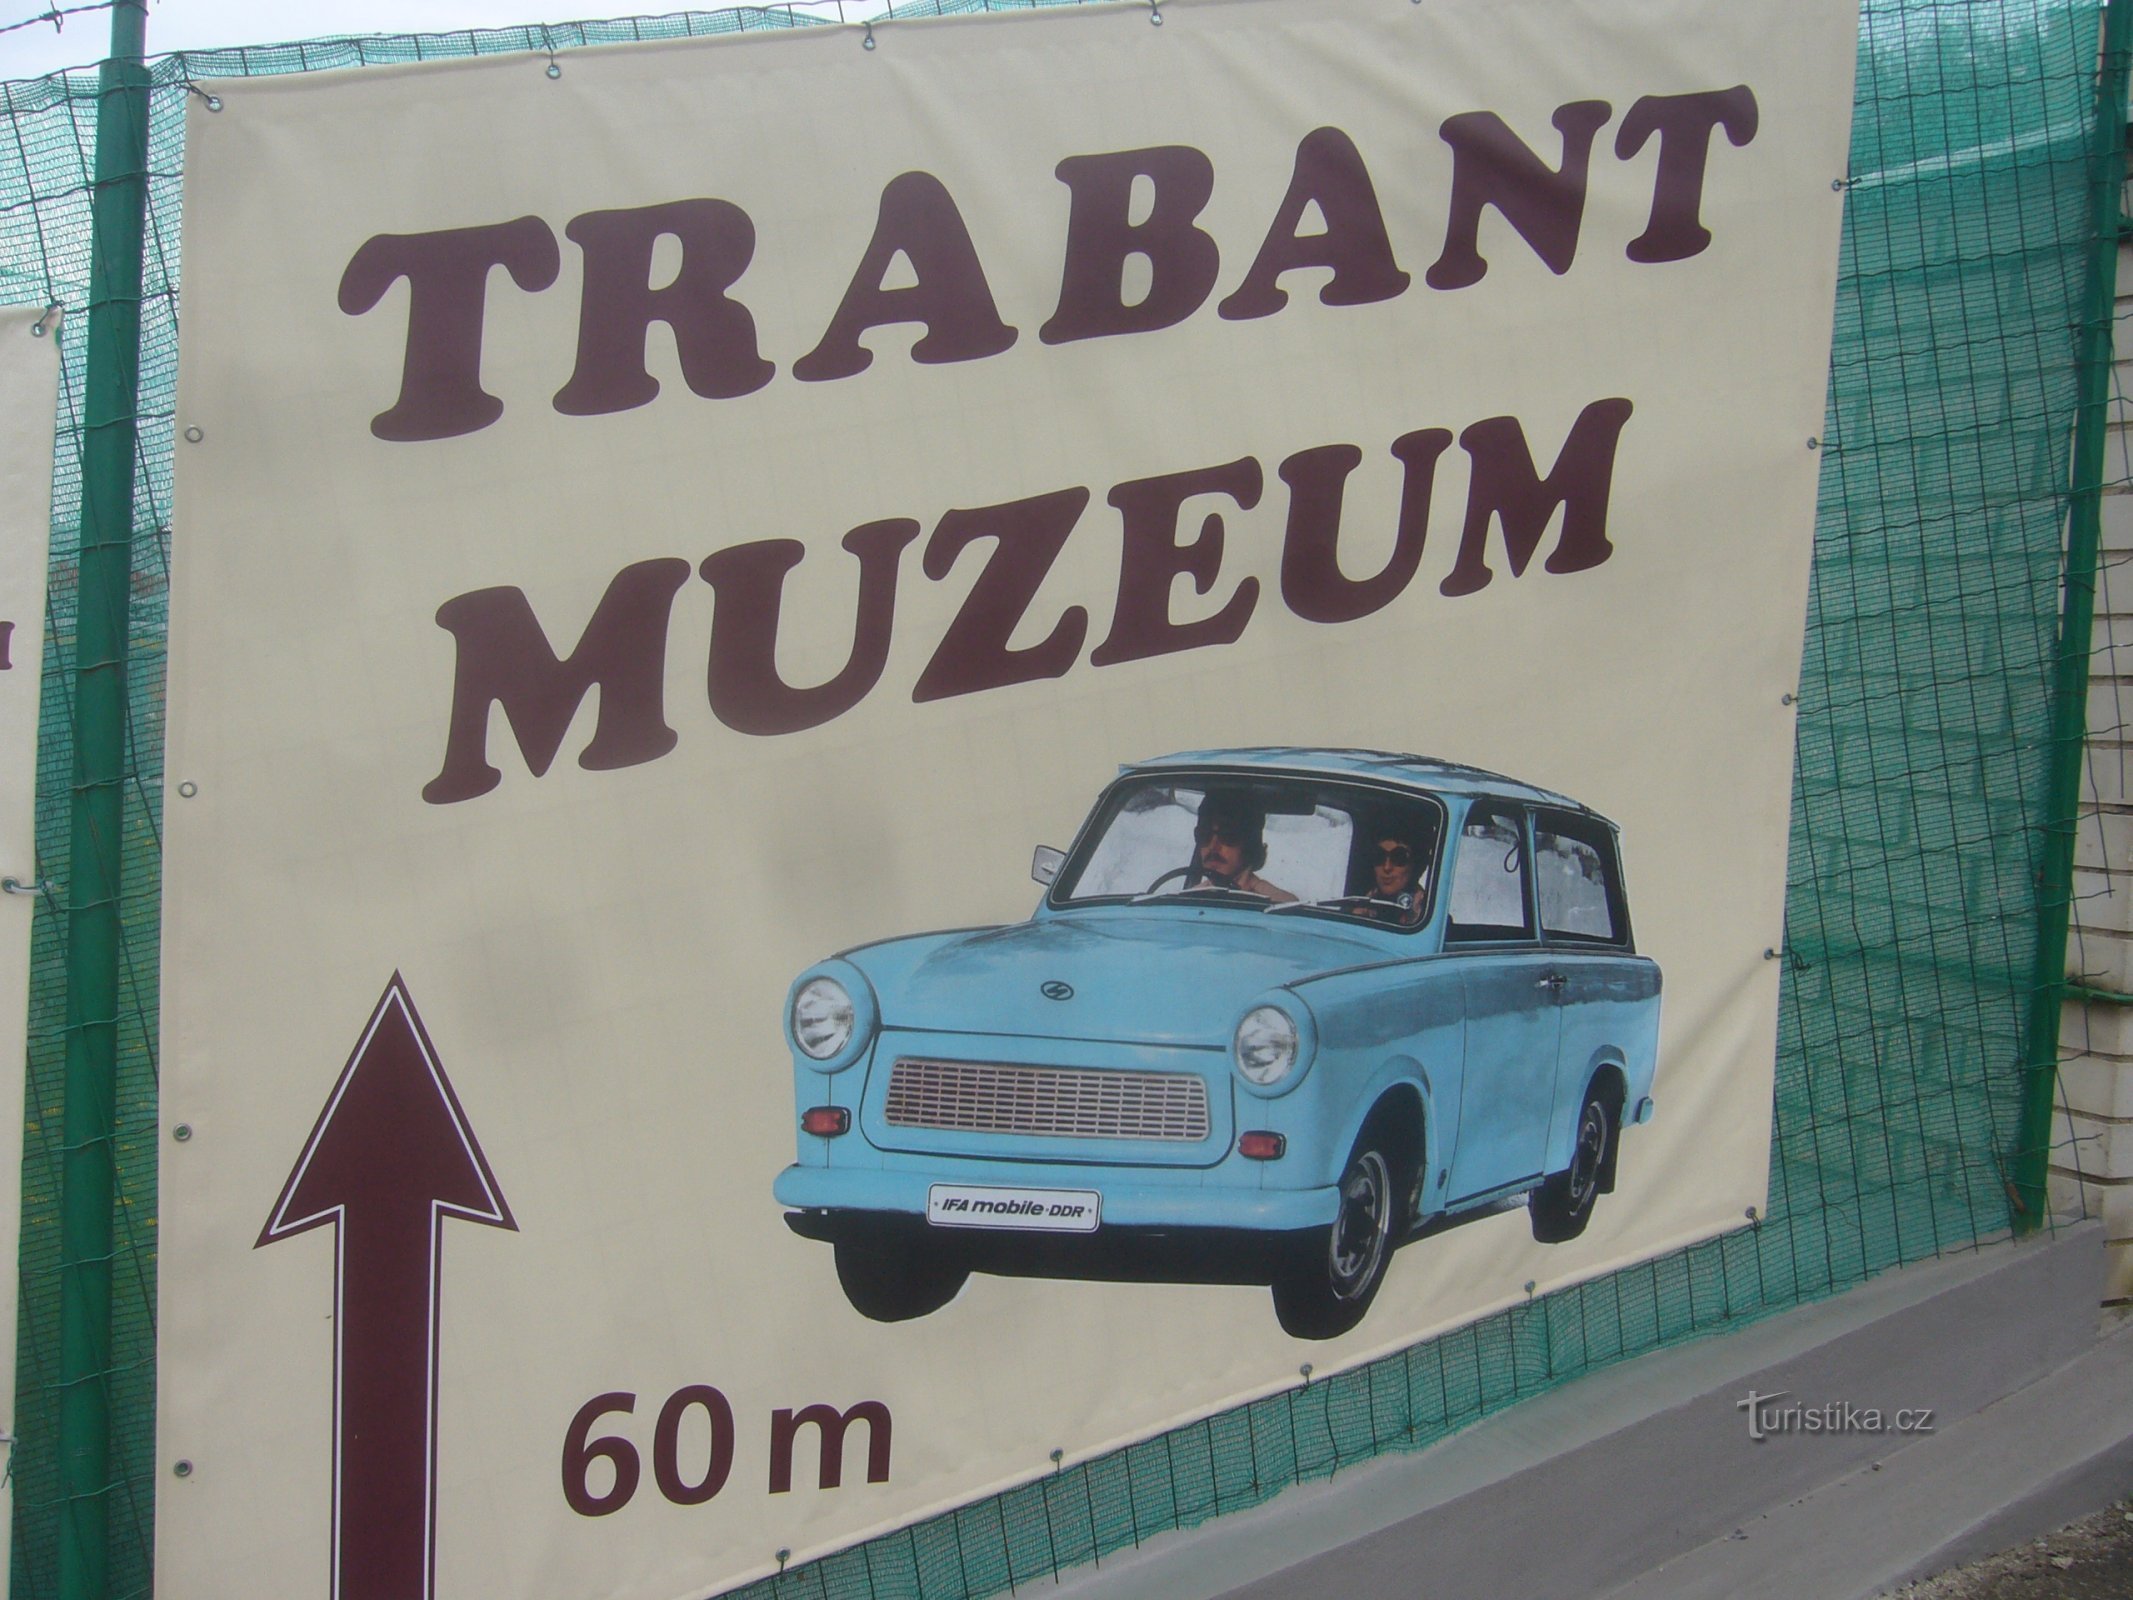 Musée Trabant Motol